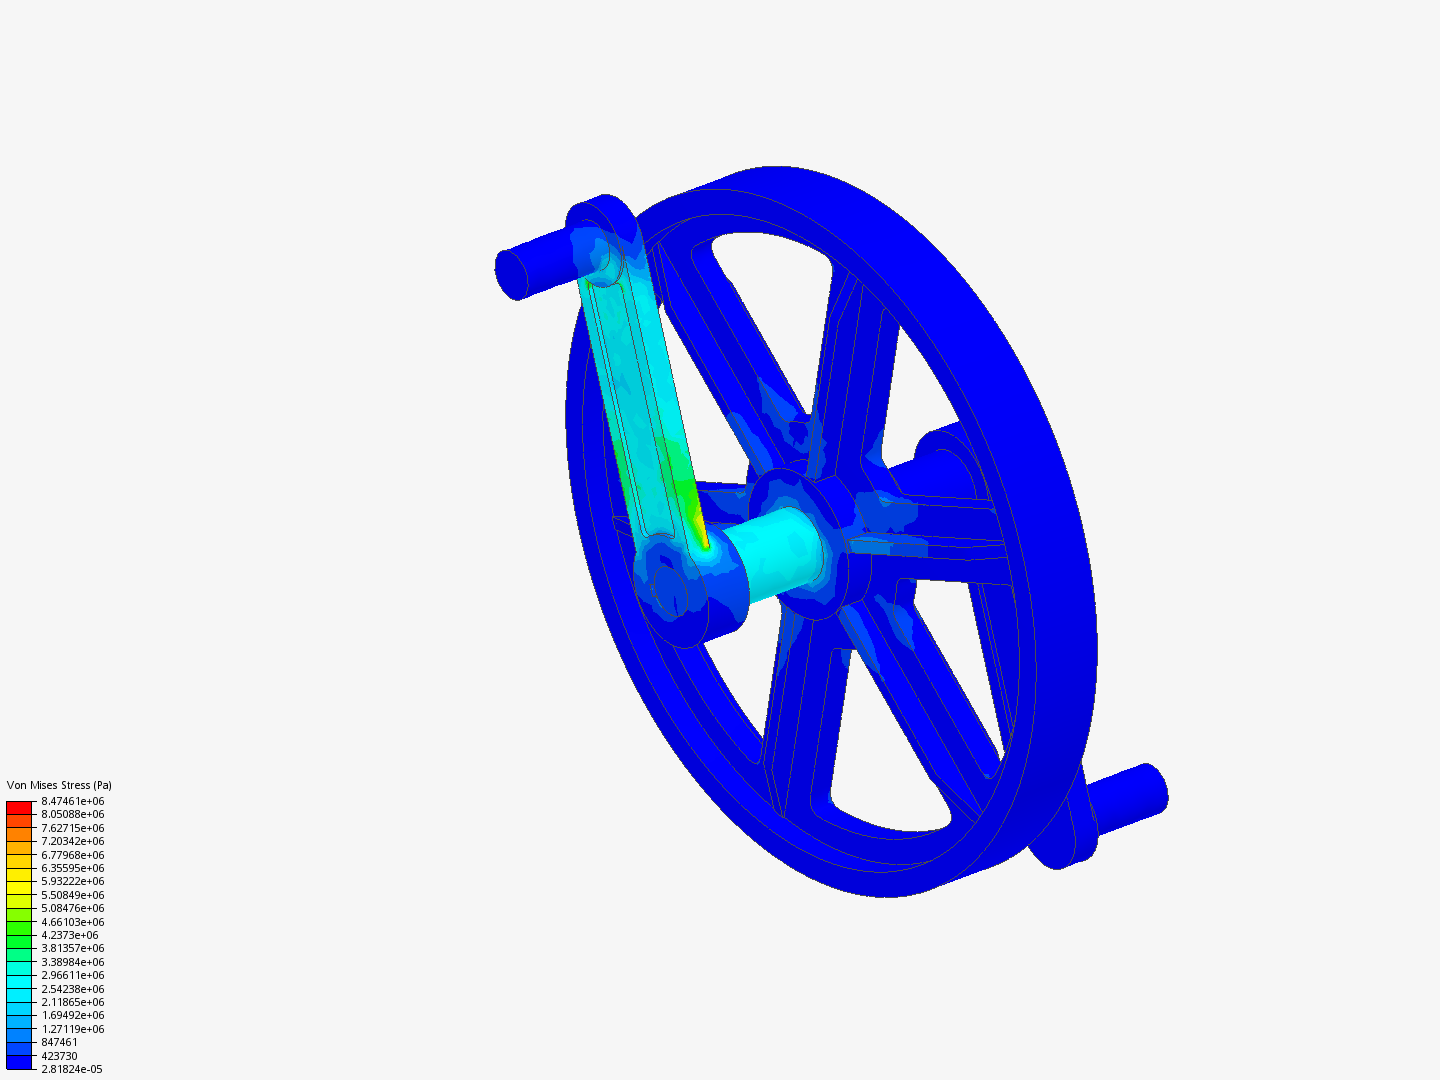 Simulation of a Crank Assembly - Copy image